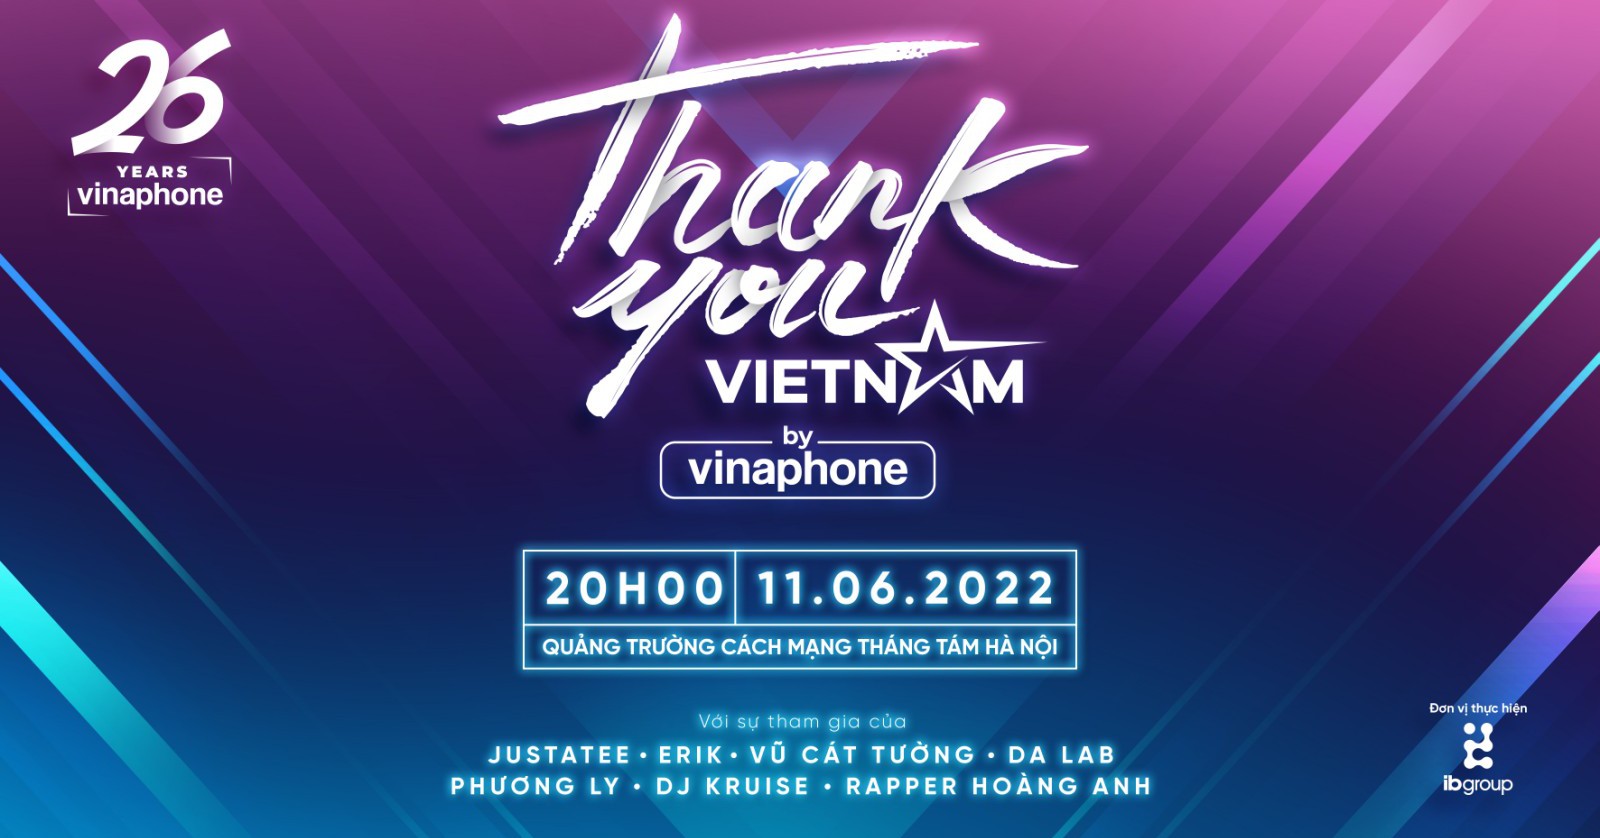 Music Festival “Thank you, Vietnam”, gathering “terrible” stars